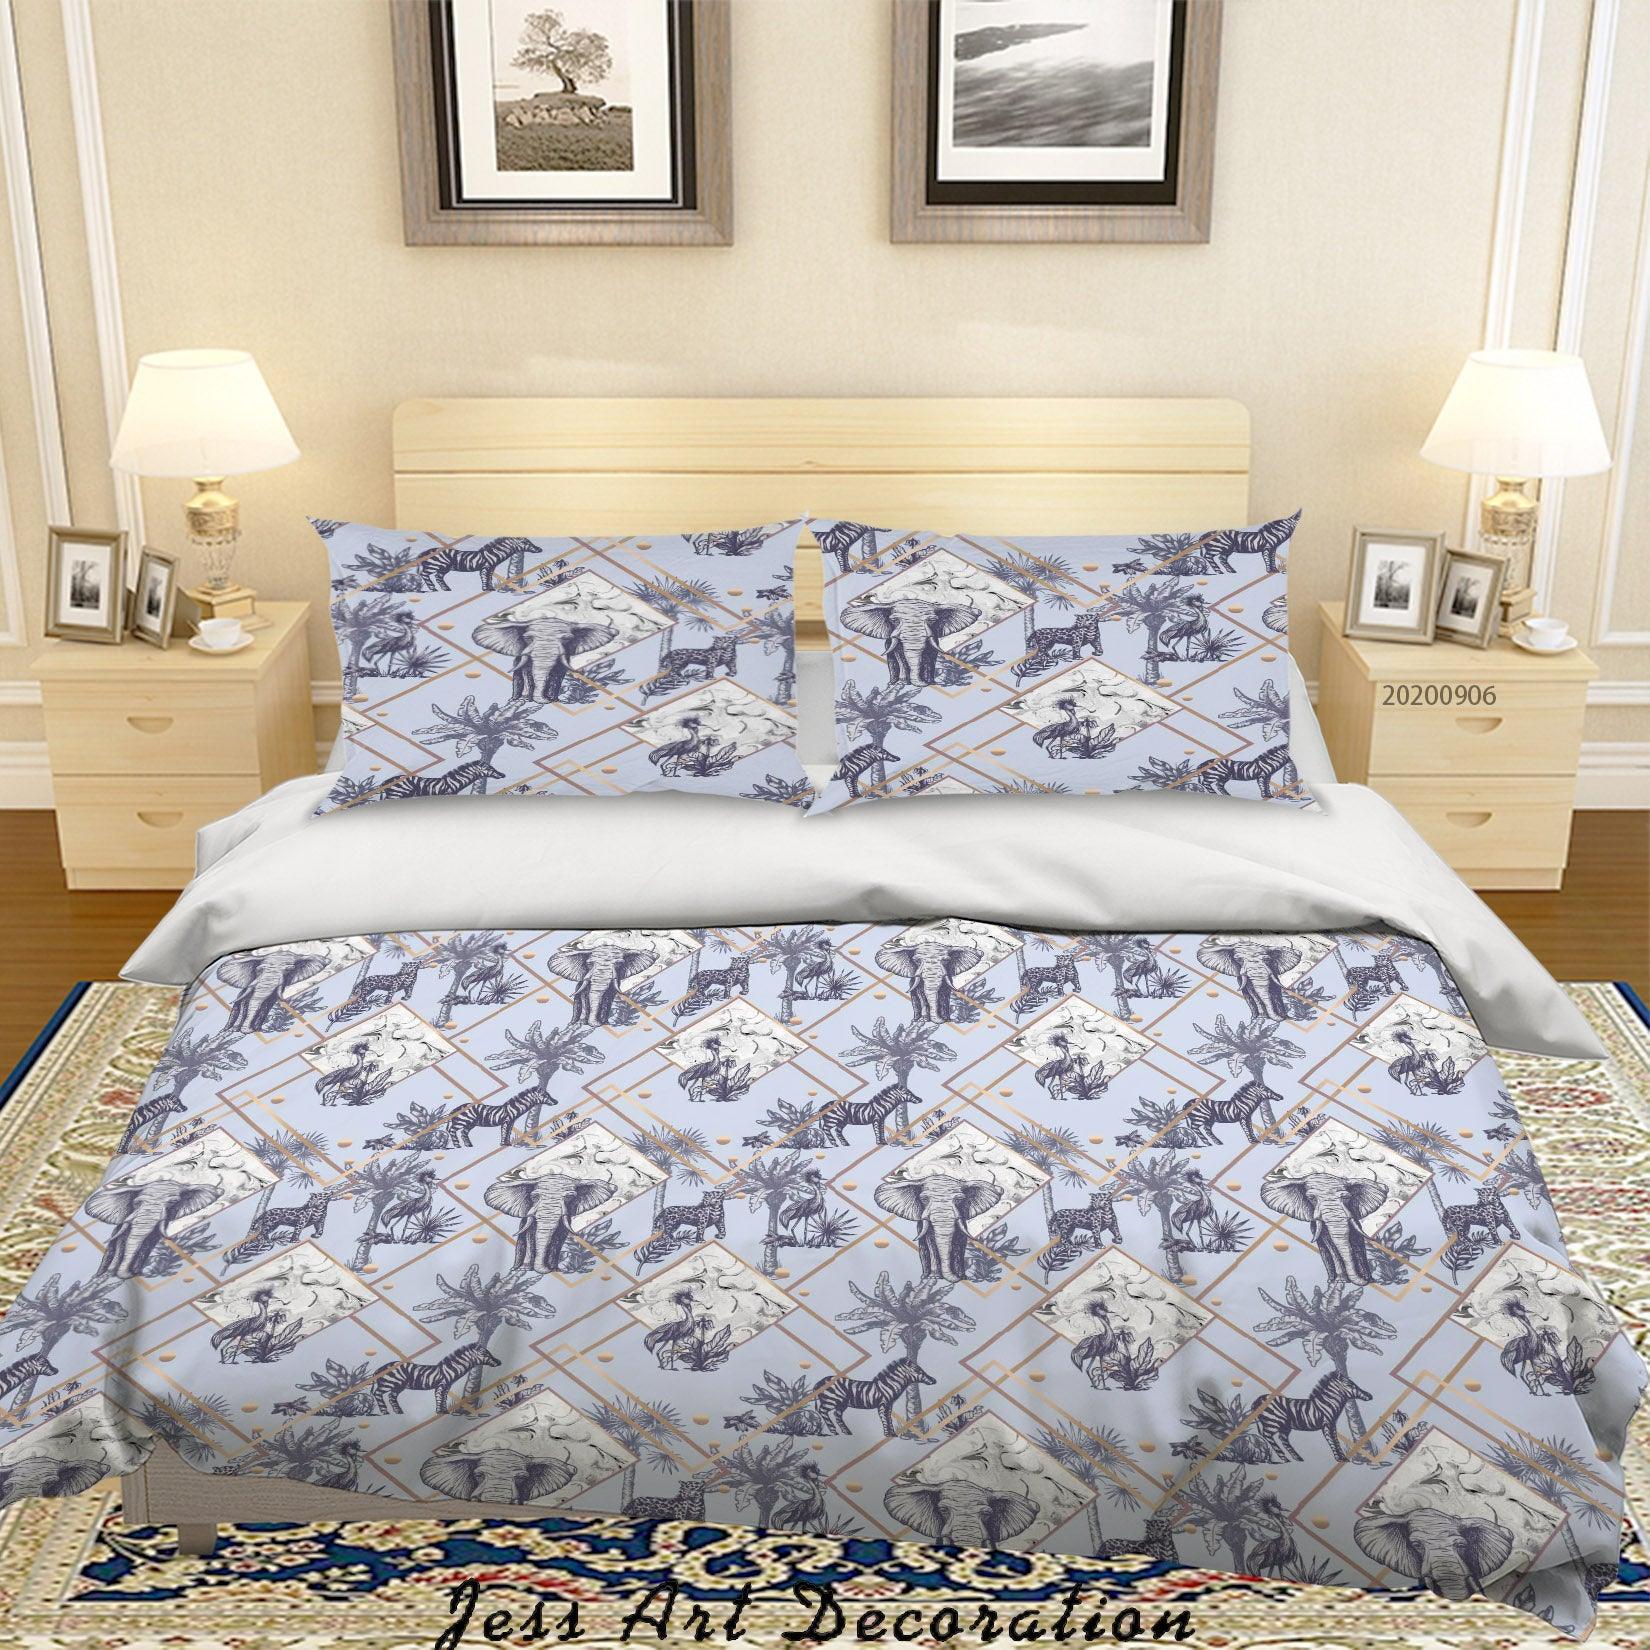 3D Vintage Fresh Leaves Zebra Pattern Quilt Cover Set Bedding Set Duvet Cover Pillowcases WJ 3660- Jess Art Decoration